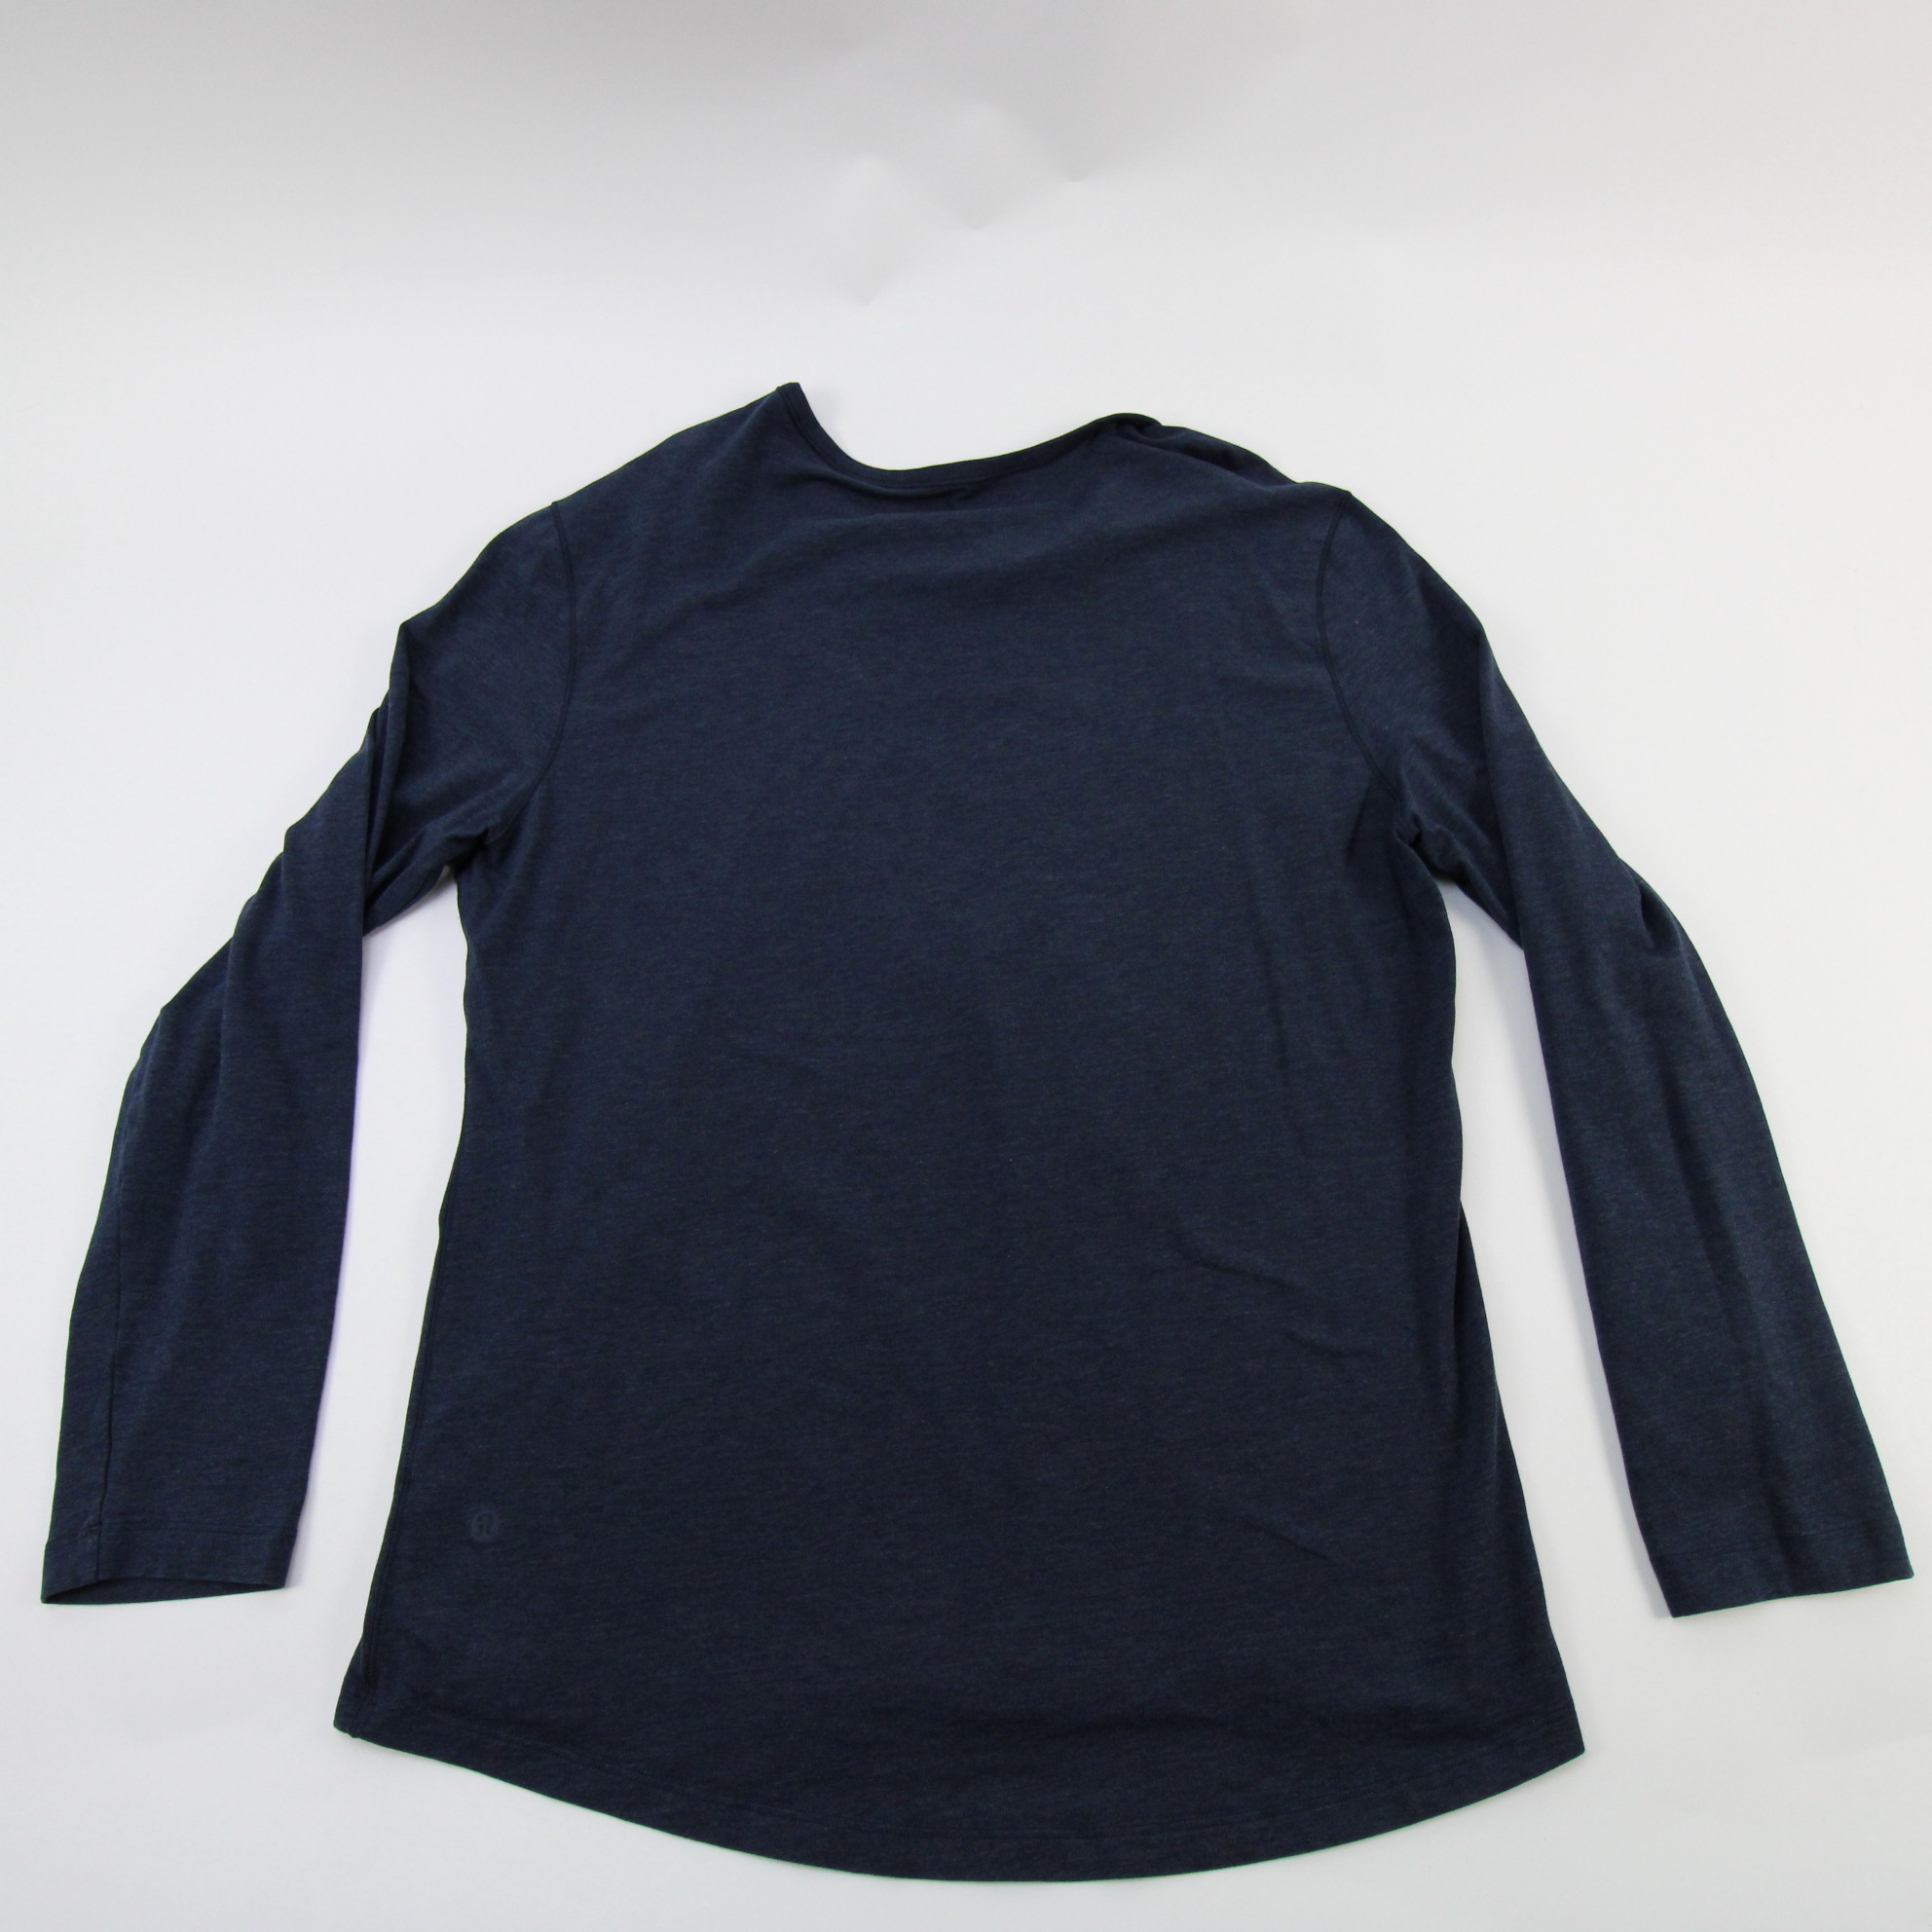 Lululemon Long Sleeve Shirt Men's Navy Used | eBay